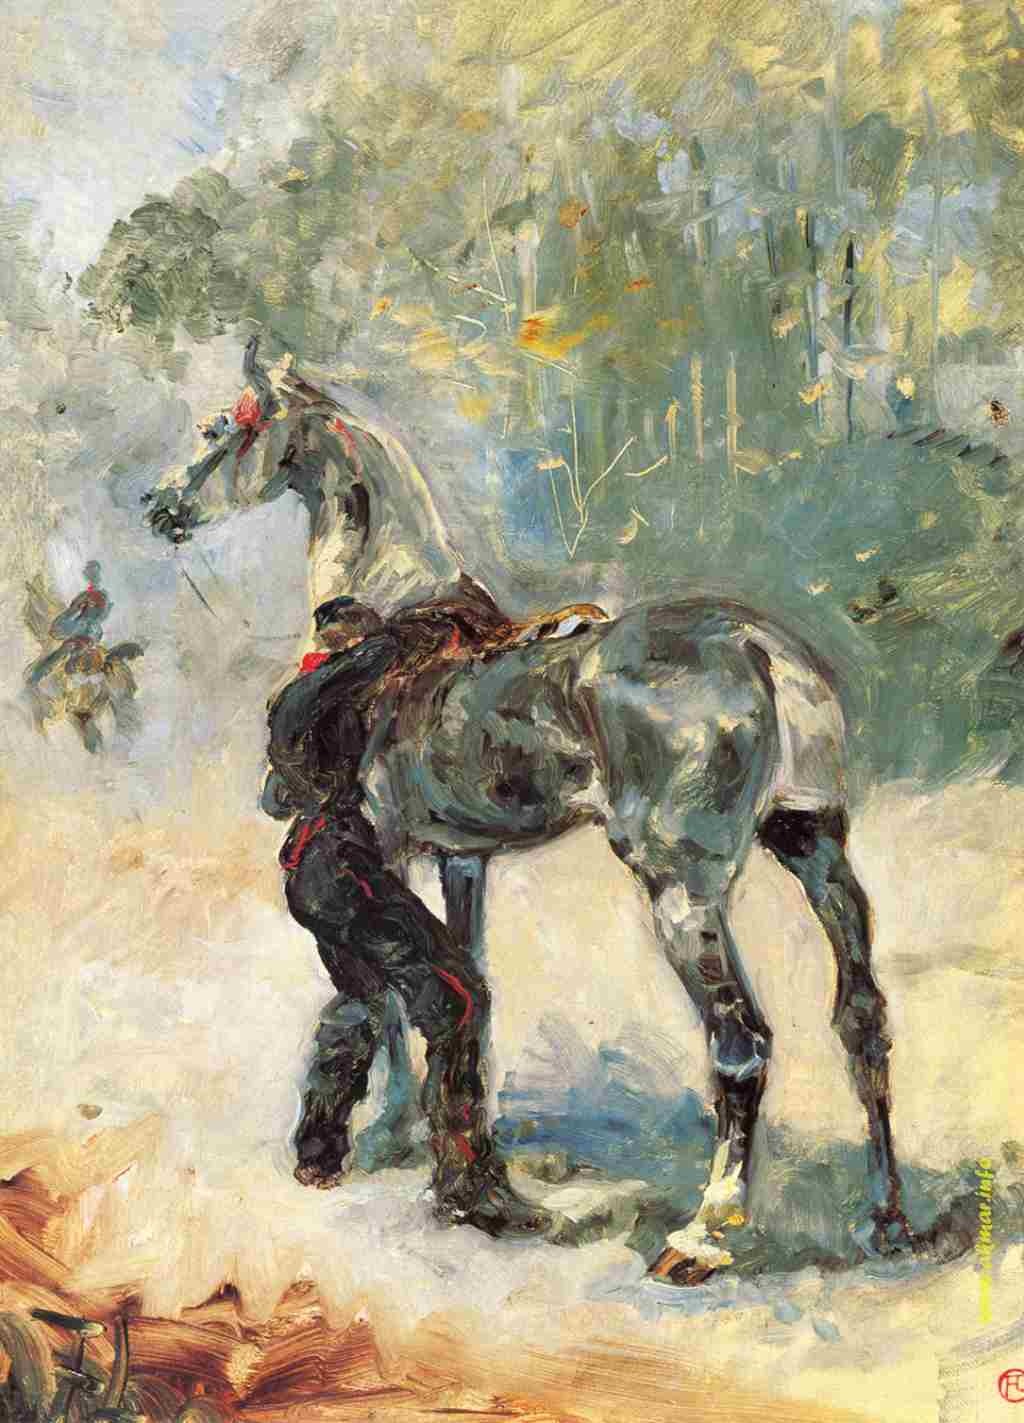 Анри де Тулуз-Лотрек. "Артиллерист, седлающий лошадь". 1881. Музей тулуз-Лотрека, Альби.